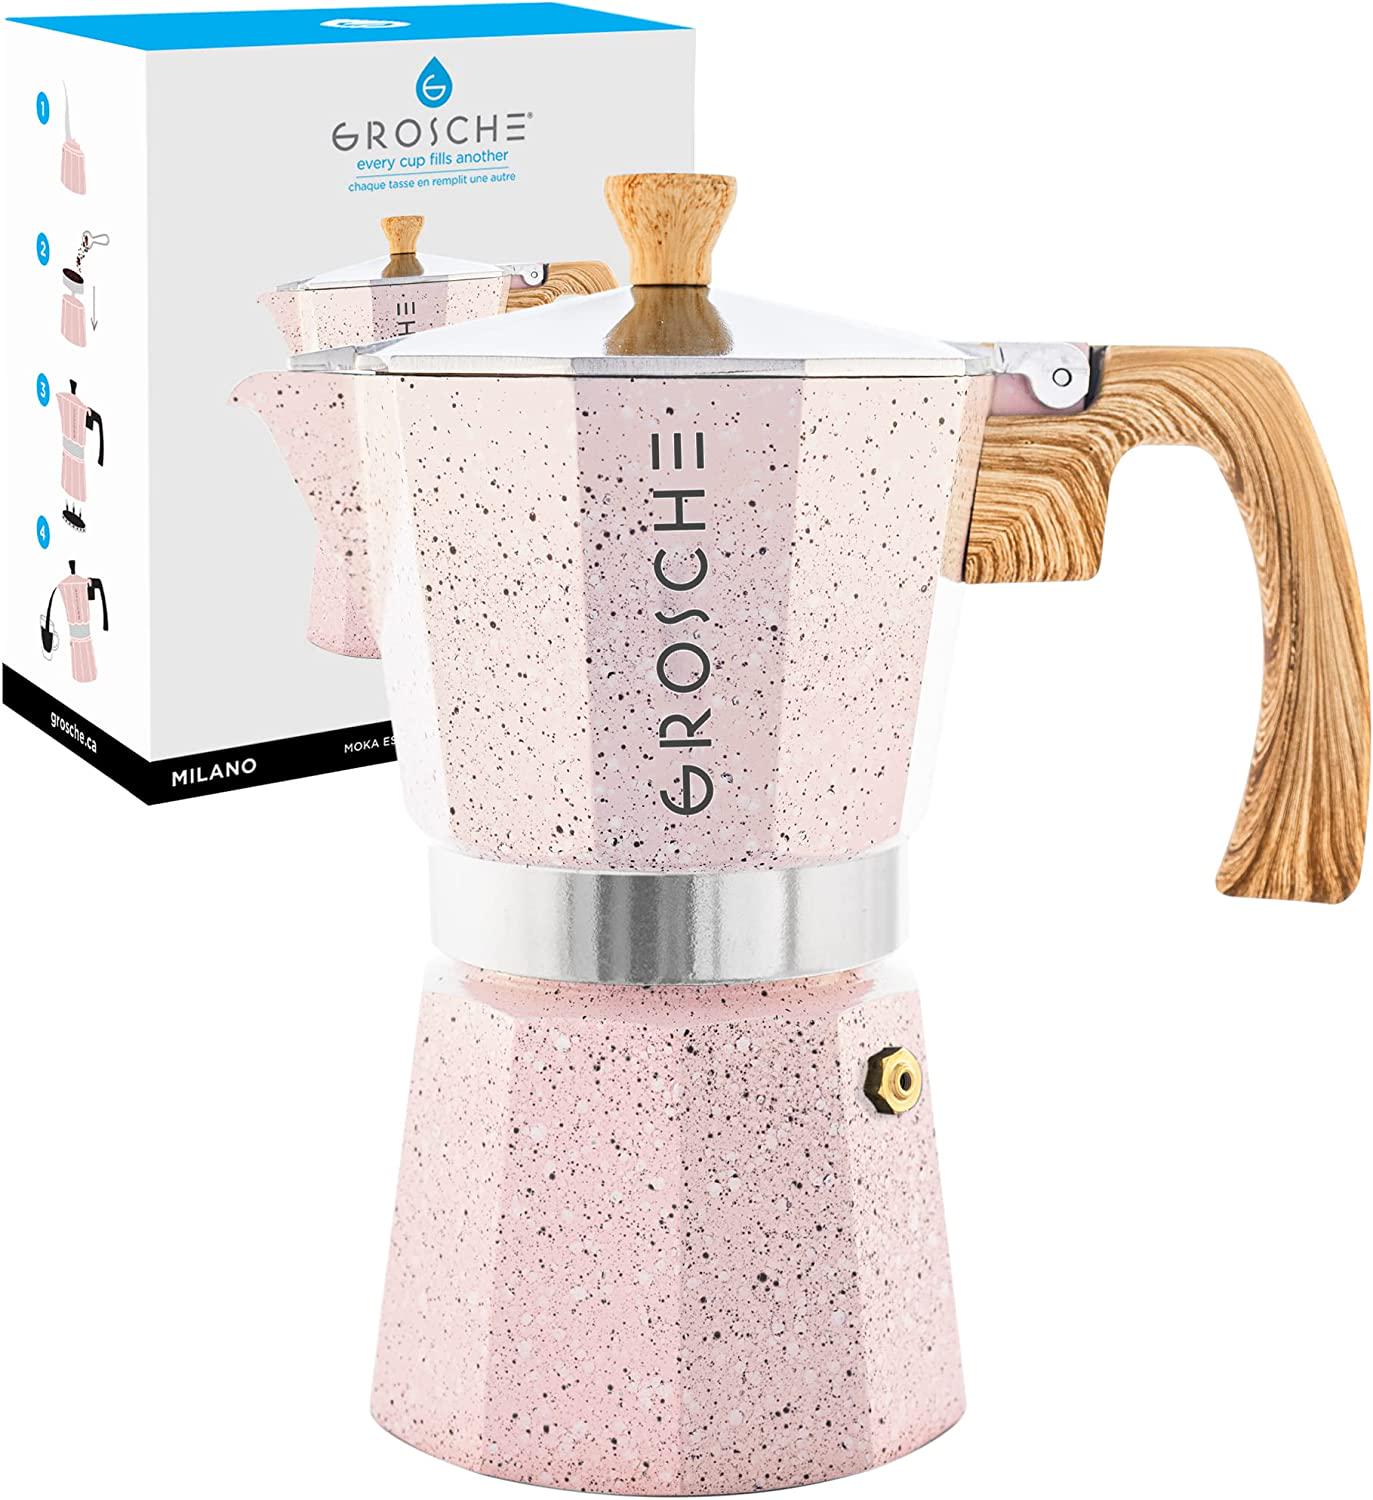 GROSCHE, GROSCHE Milano Moka pot, Stovetop Espresso maker, Greca Coffee Maker, Stovetop coffee maker and espresso maker percolator (Pink, 6 cup)